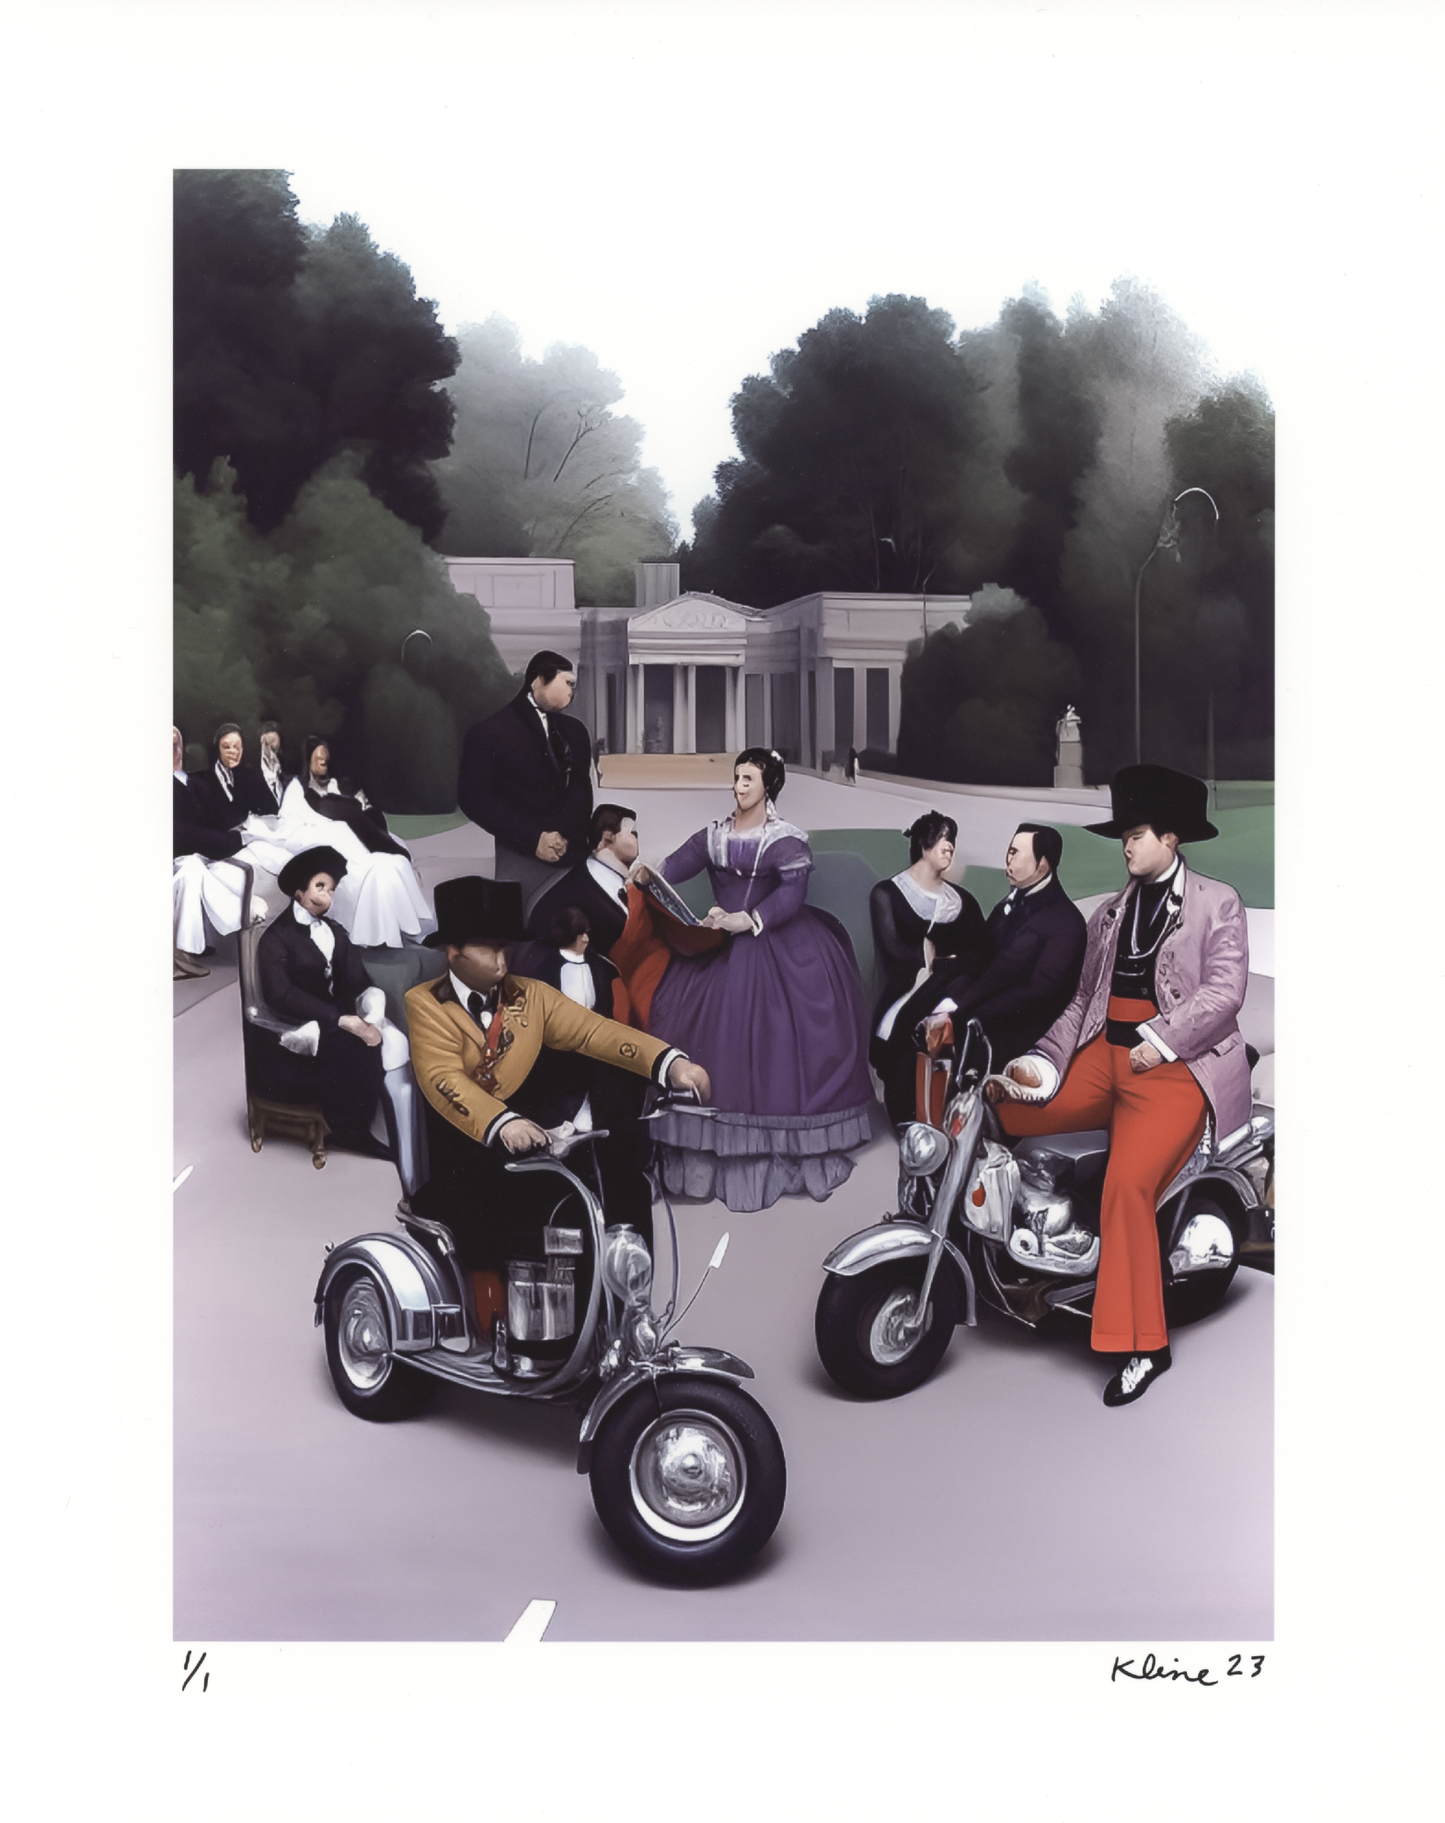 Motorcycle Club. Digital Art Print. 1/1 Edition. 8" x 10". John Kline Artwork